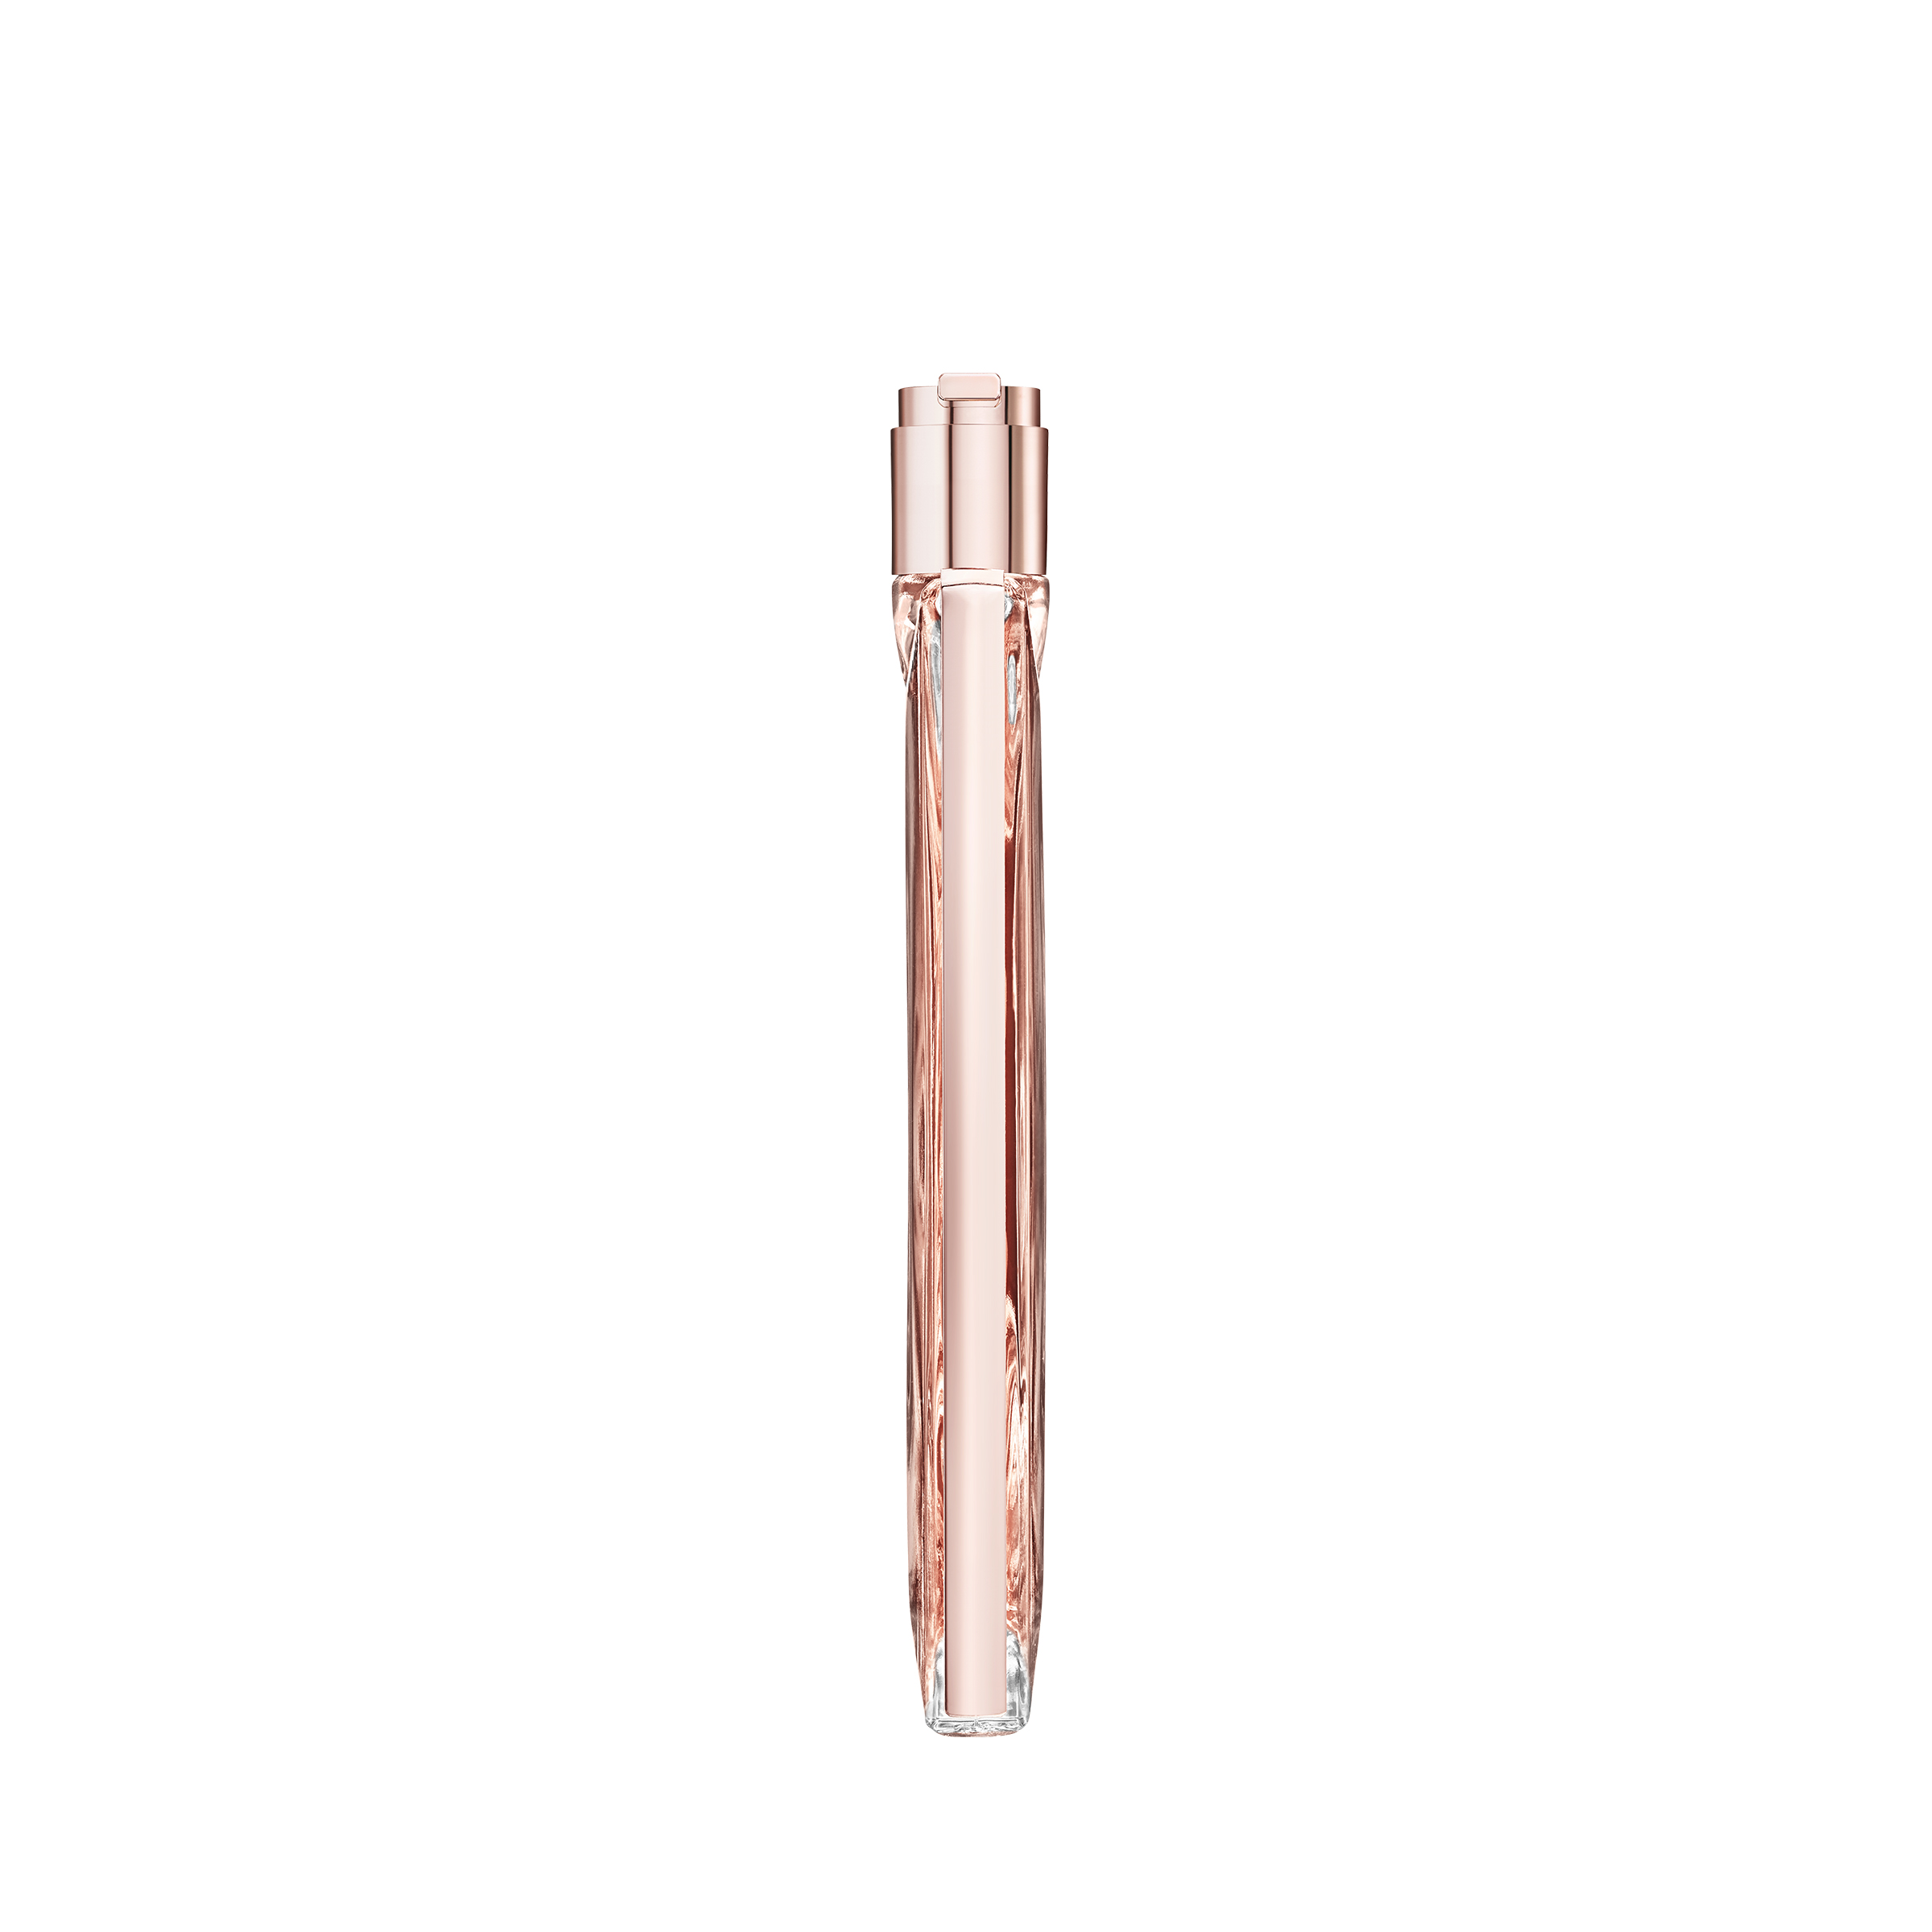 Idôle the new feminine fragrance by Lancôme 2 Lancôme predstavlja Idôle, ženstveni miris za novu generaciju